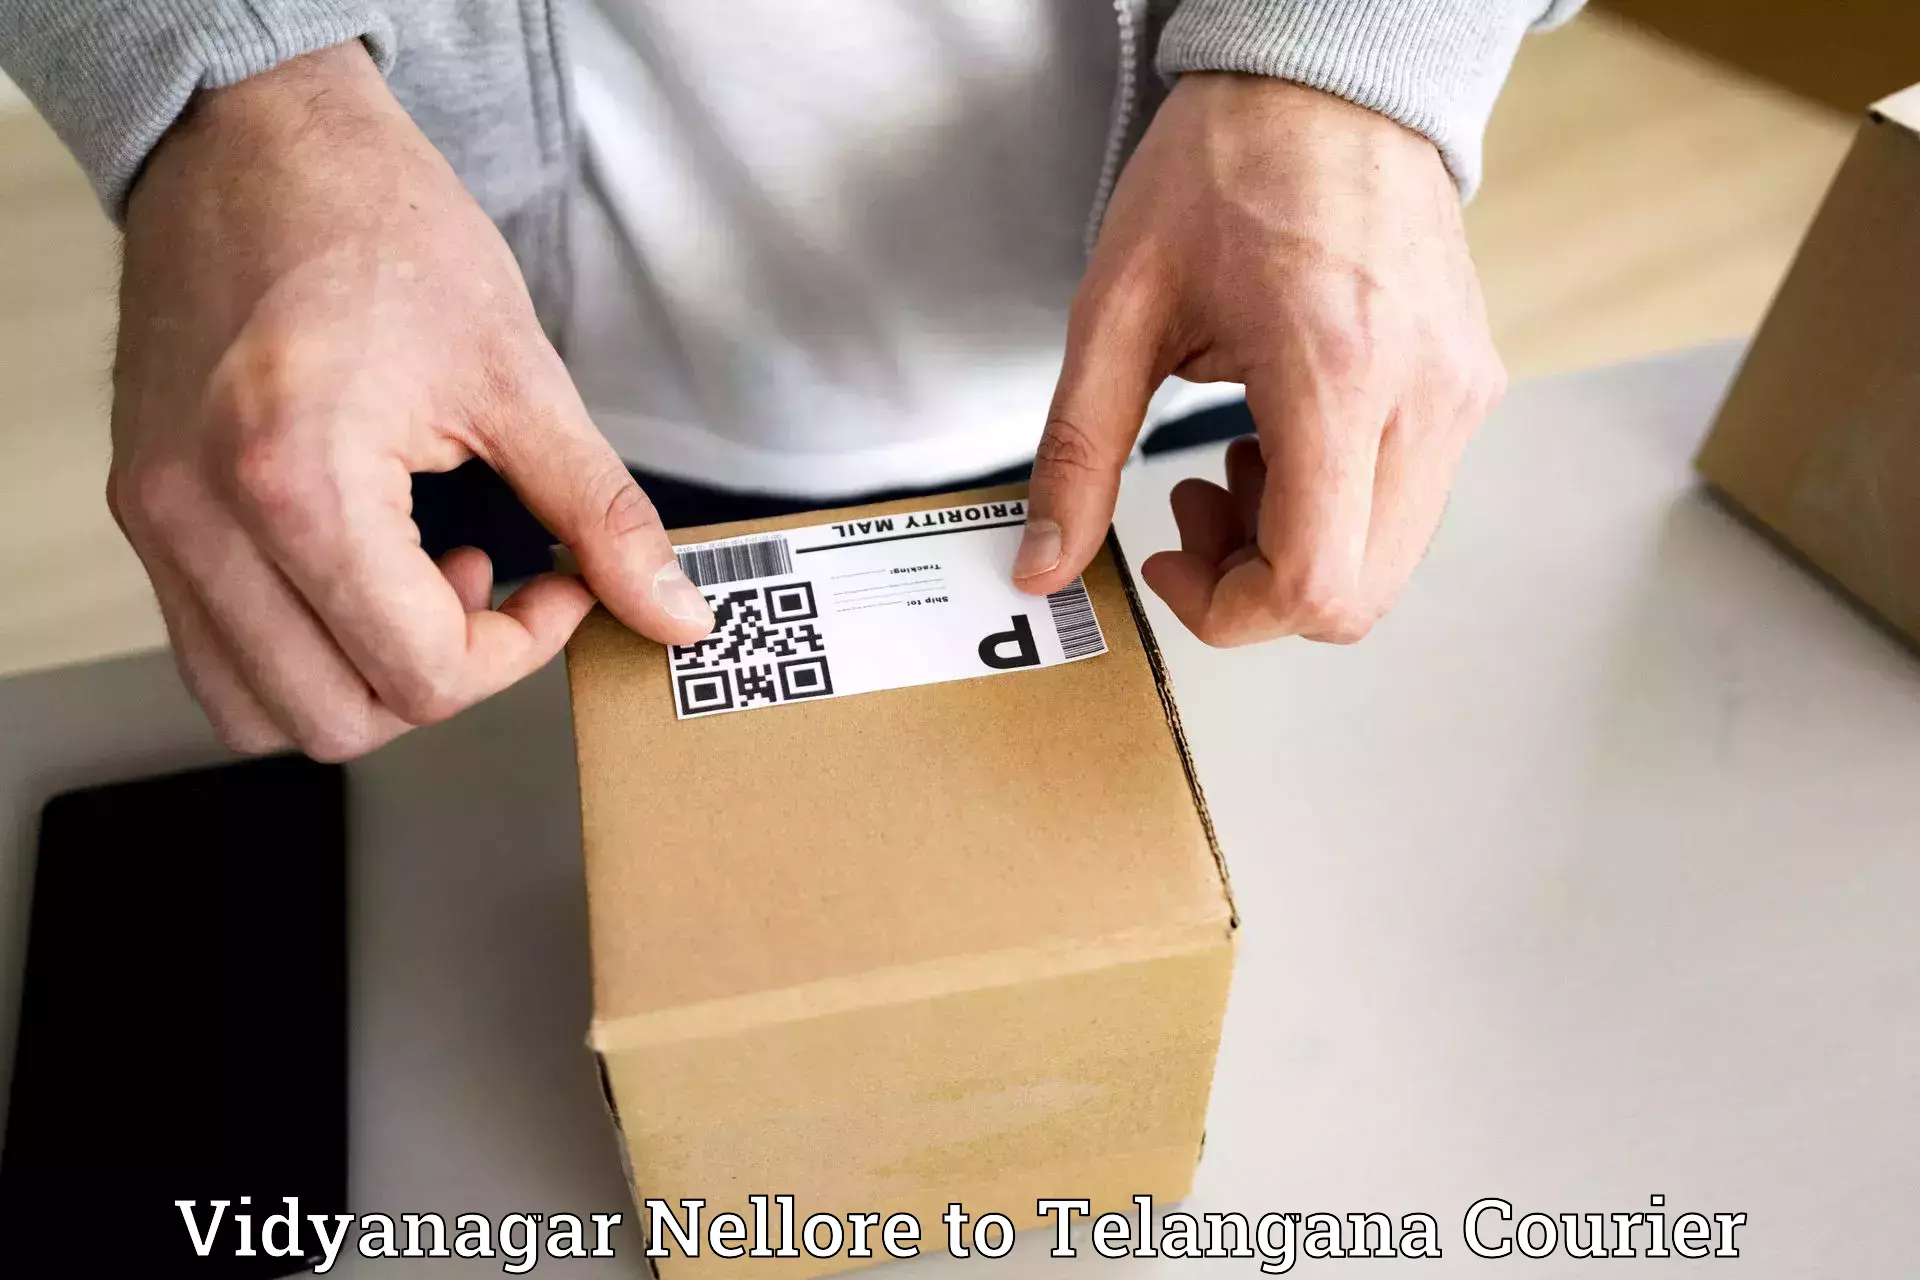 Courier service partnerships in Vidyanagar Nellore to Navipet